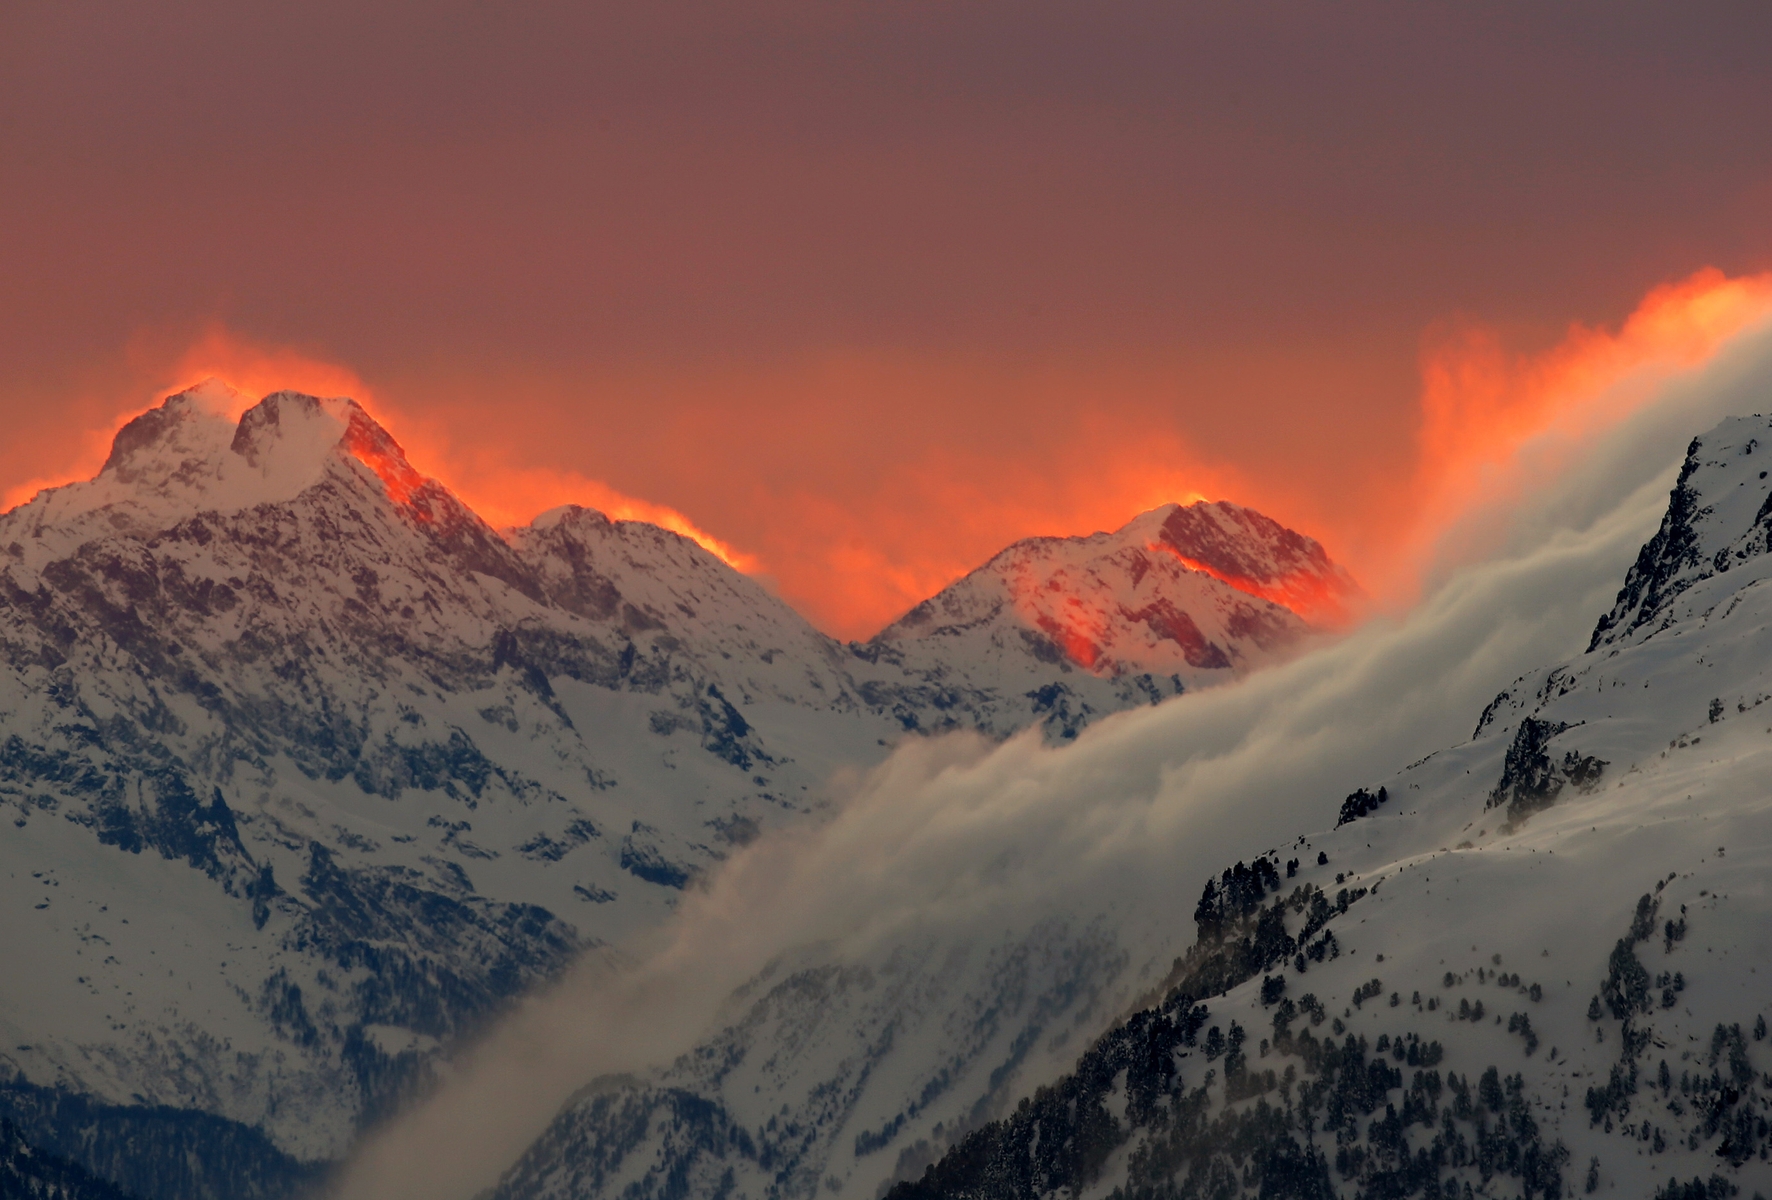 Arnd Wiegmann The sunset illuminates the peaks of the mountains near the Swiss m by Arnd Wiegmann